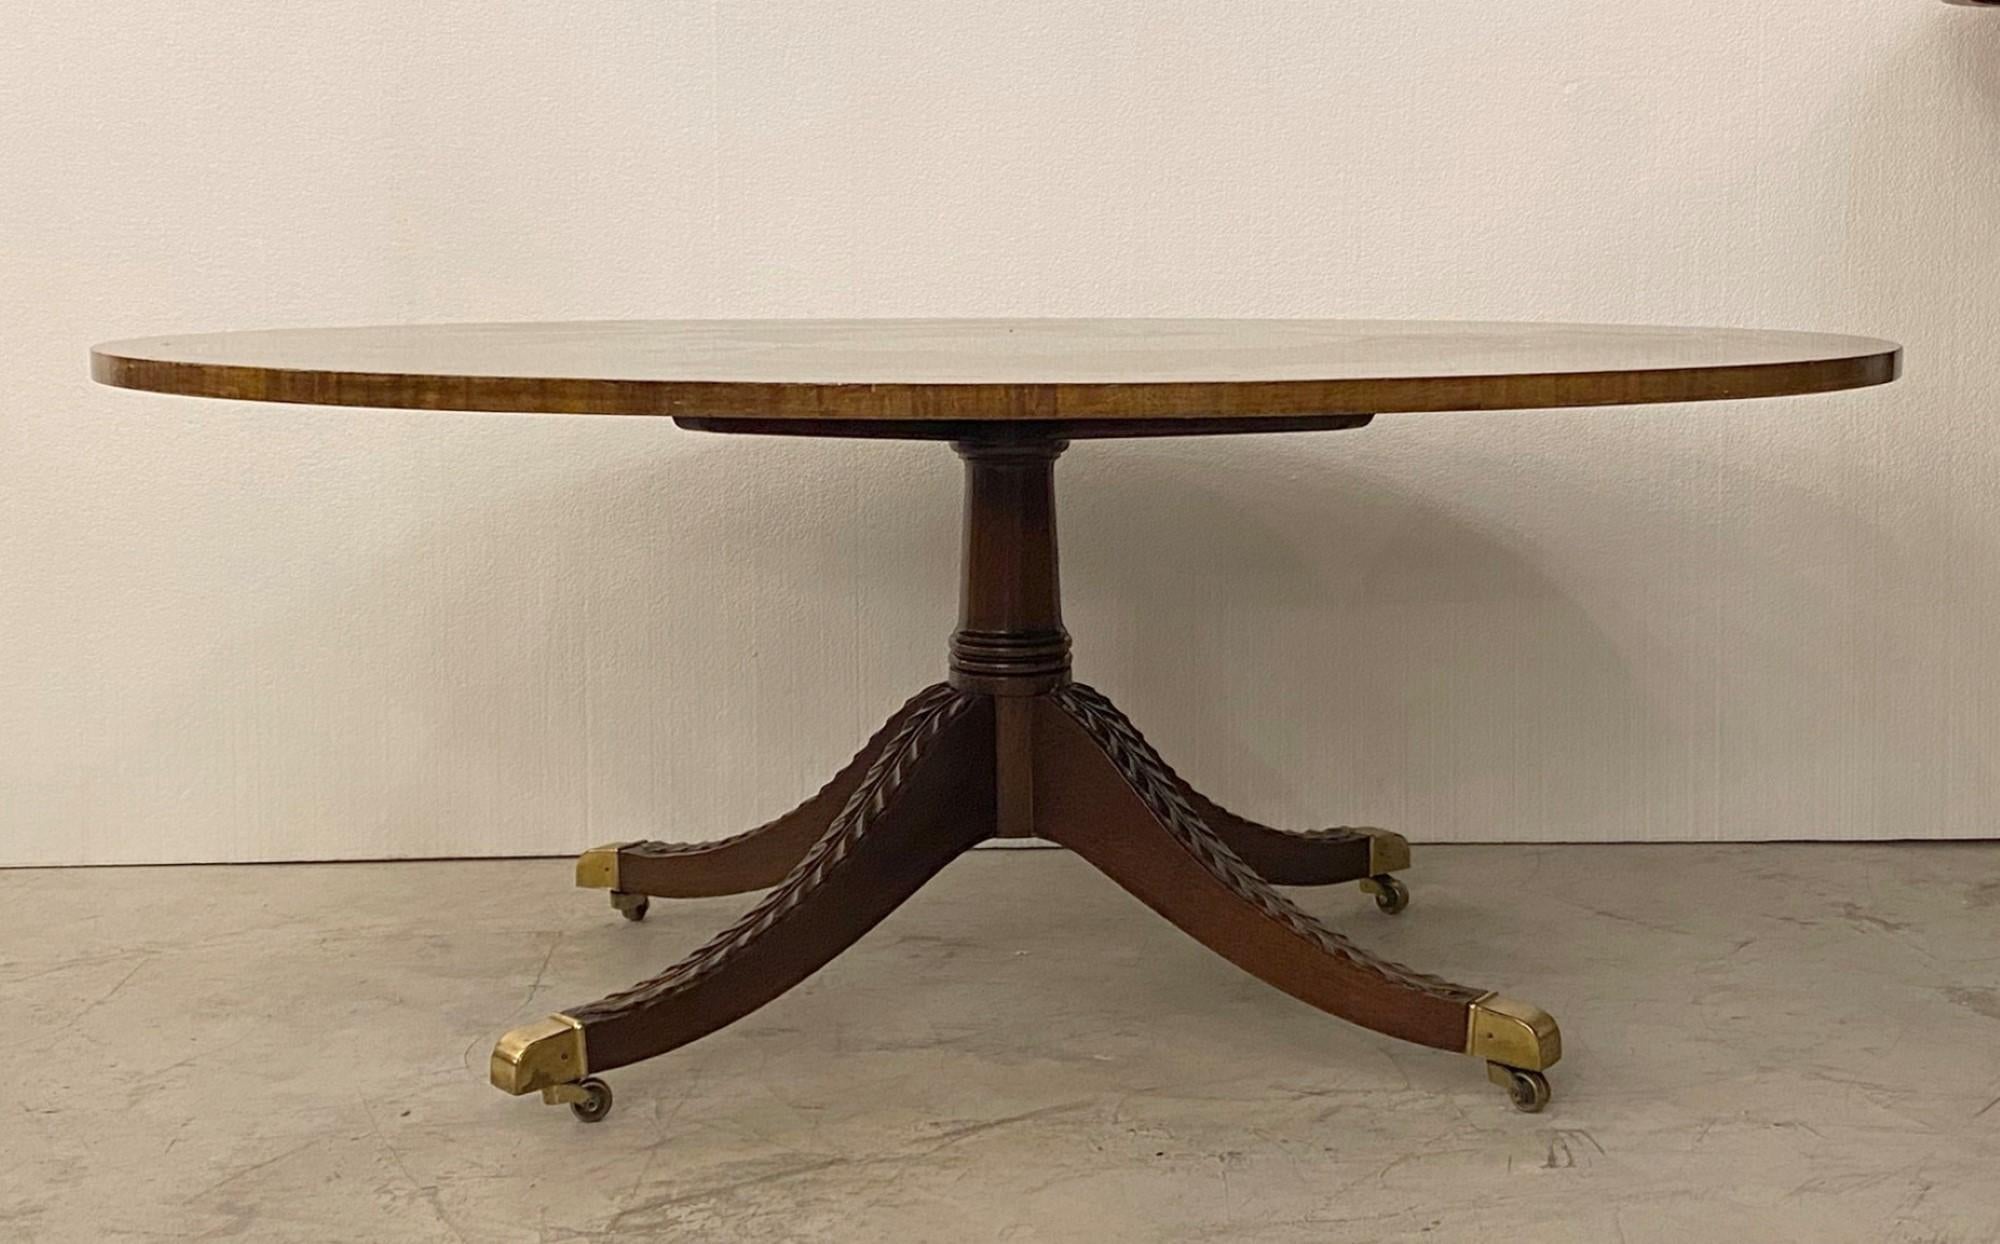 20th Century Mid-20th C. Oval Inlaid Walnut Coffee Table Brass Feet with Wheels